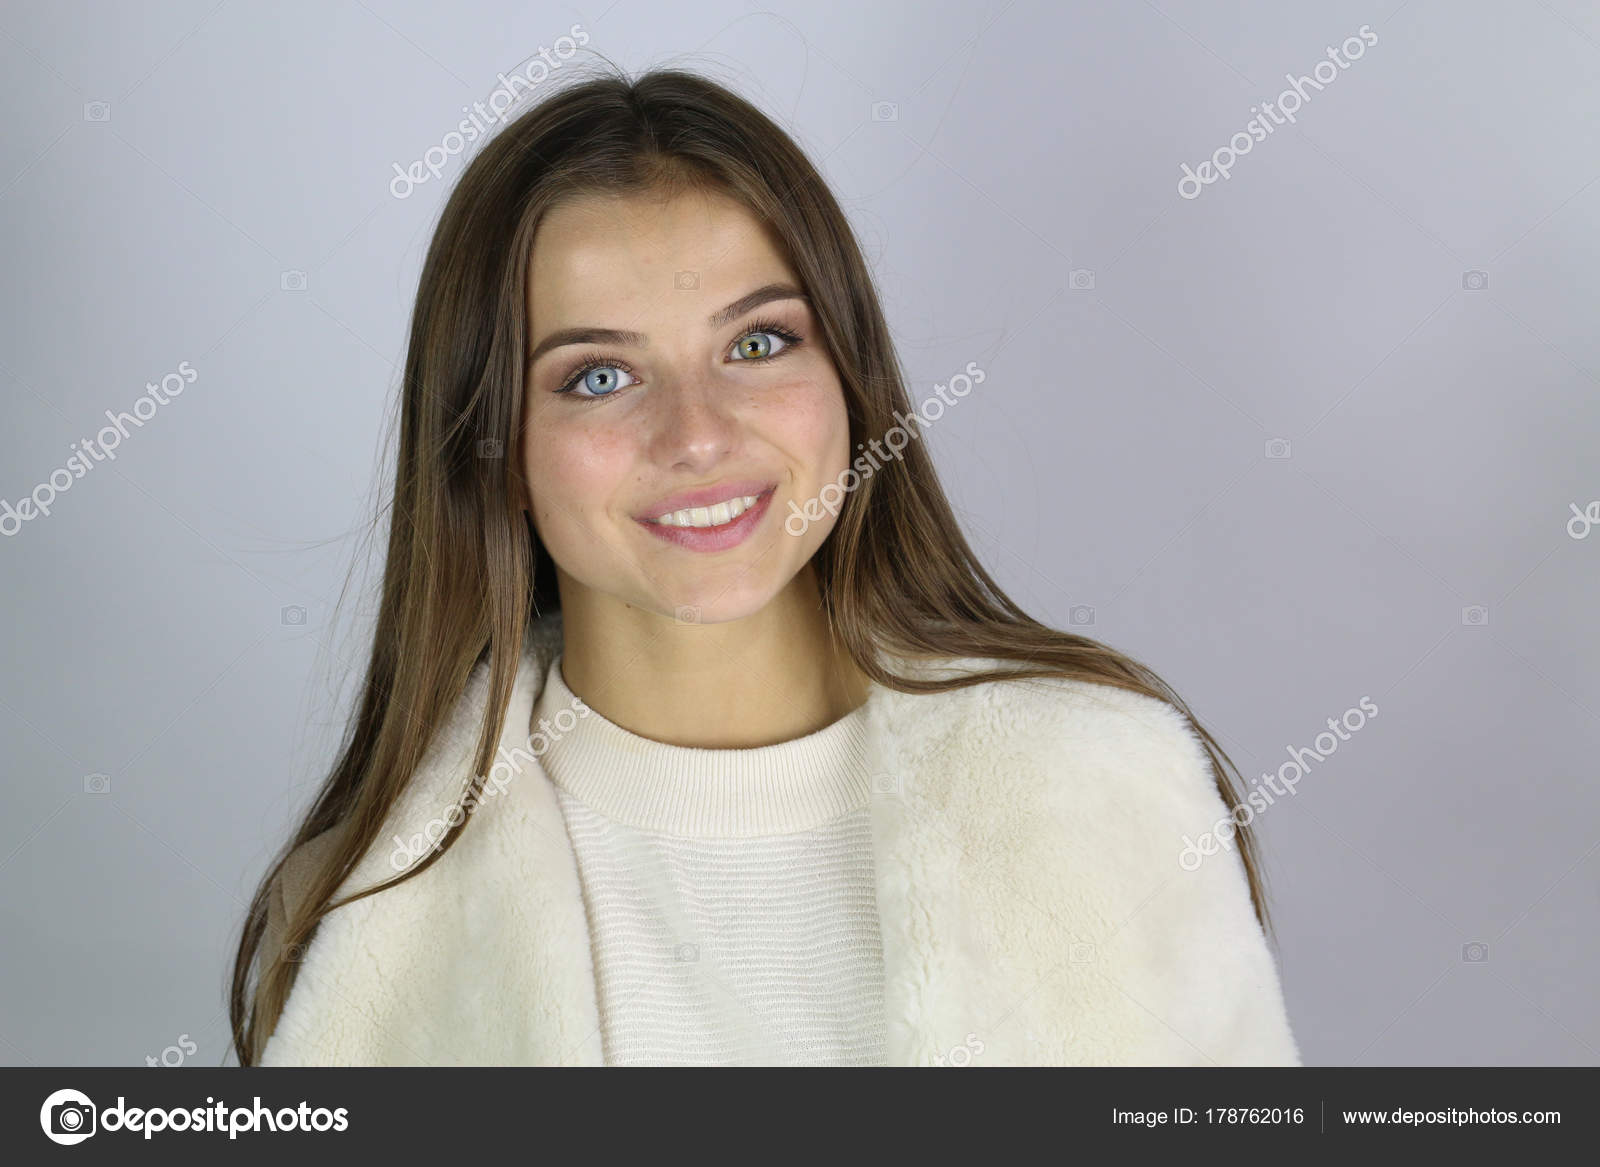 Amazing beauty teenager Portrait Beautiful Teenager Pretty Girl Smiling Stock Photo By C Rdrgraphe 178762016